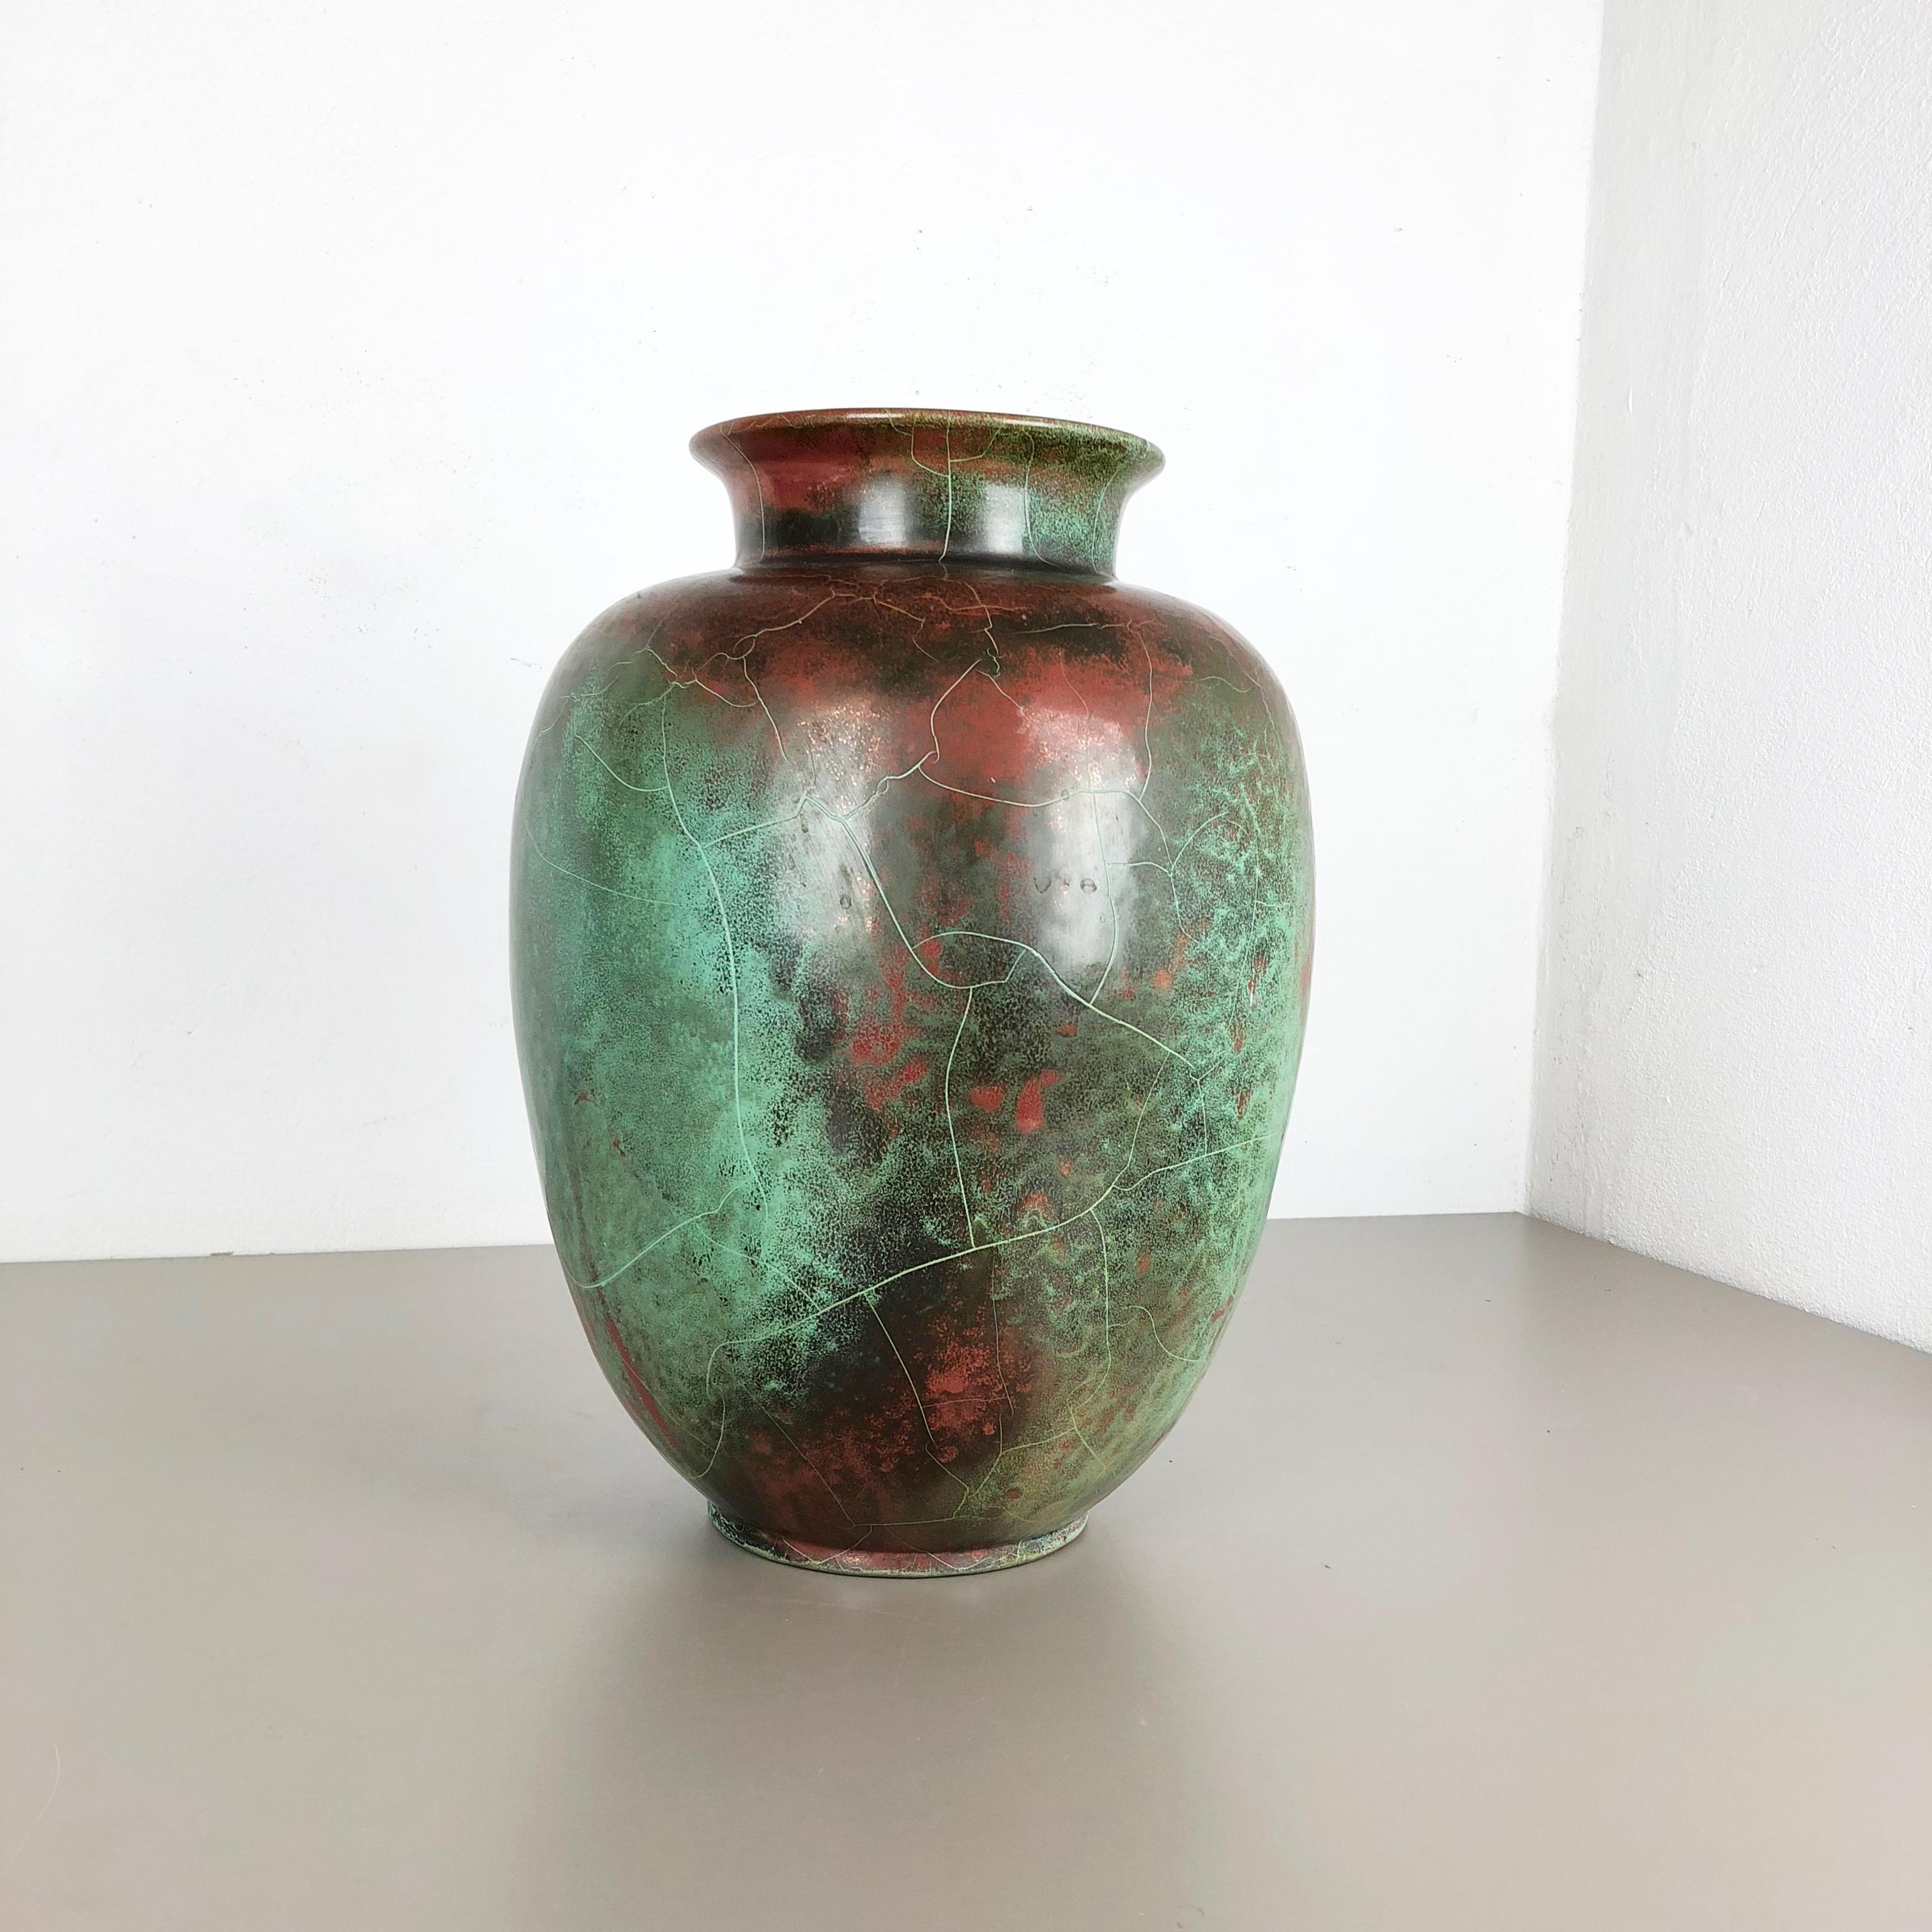 Große Studio-Keramik-Vase Richard Uhlemeyer, Hannover, Deutschland, 1940er Jahre (Moderne der Mitte des Jahrhunderts) im Angebot